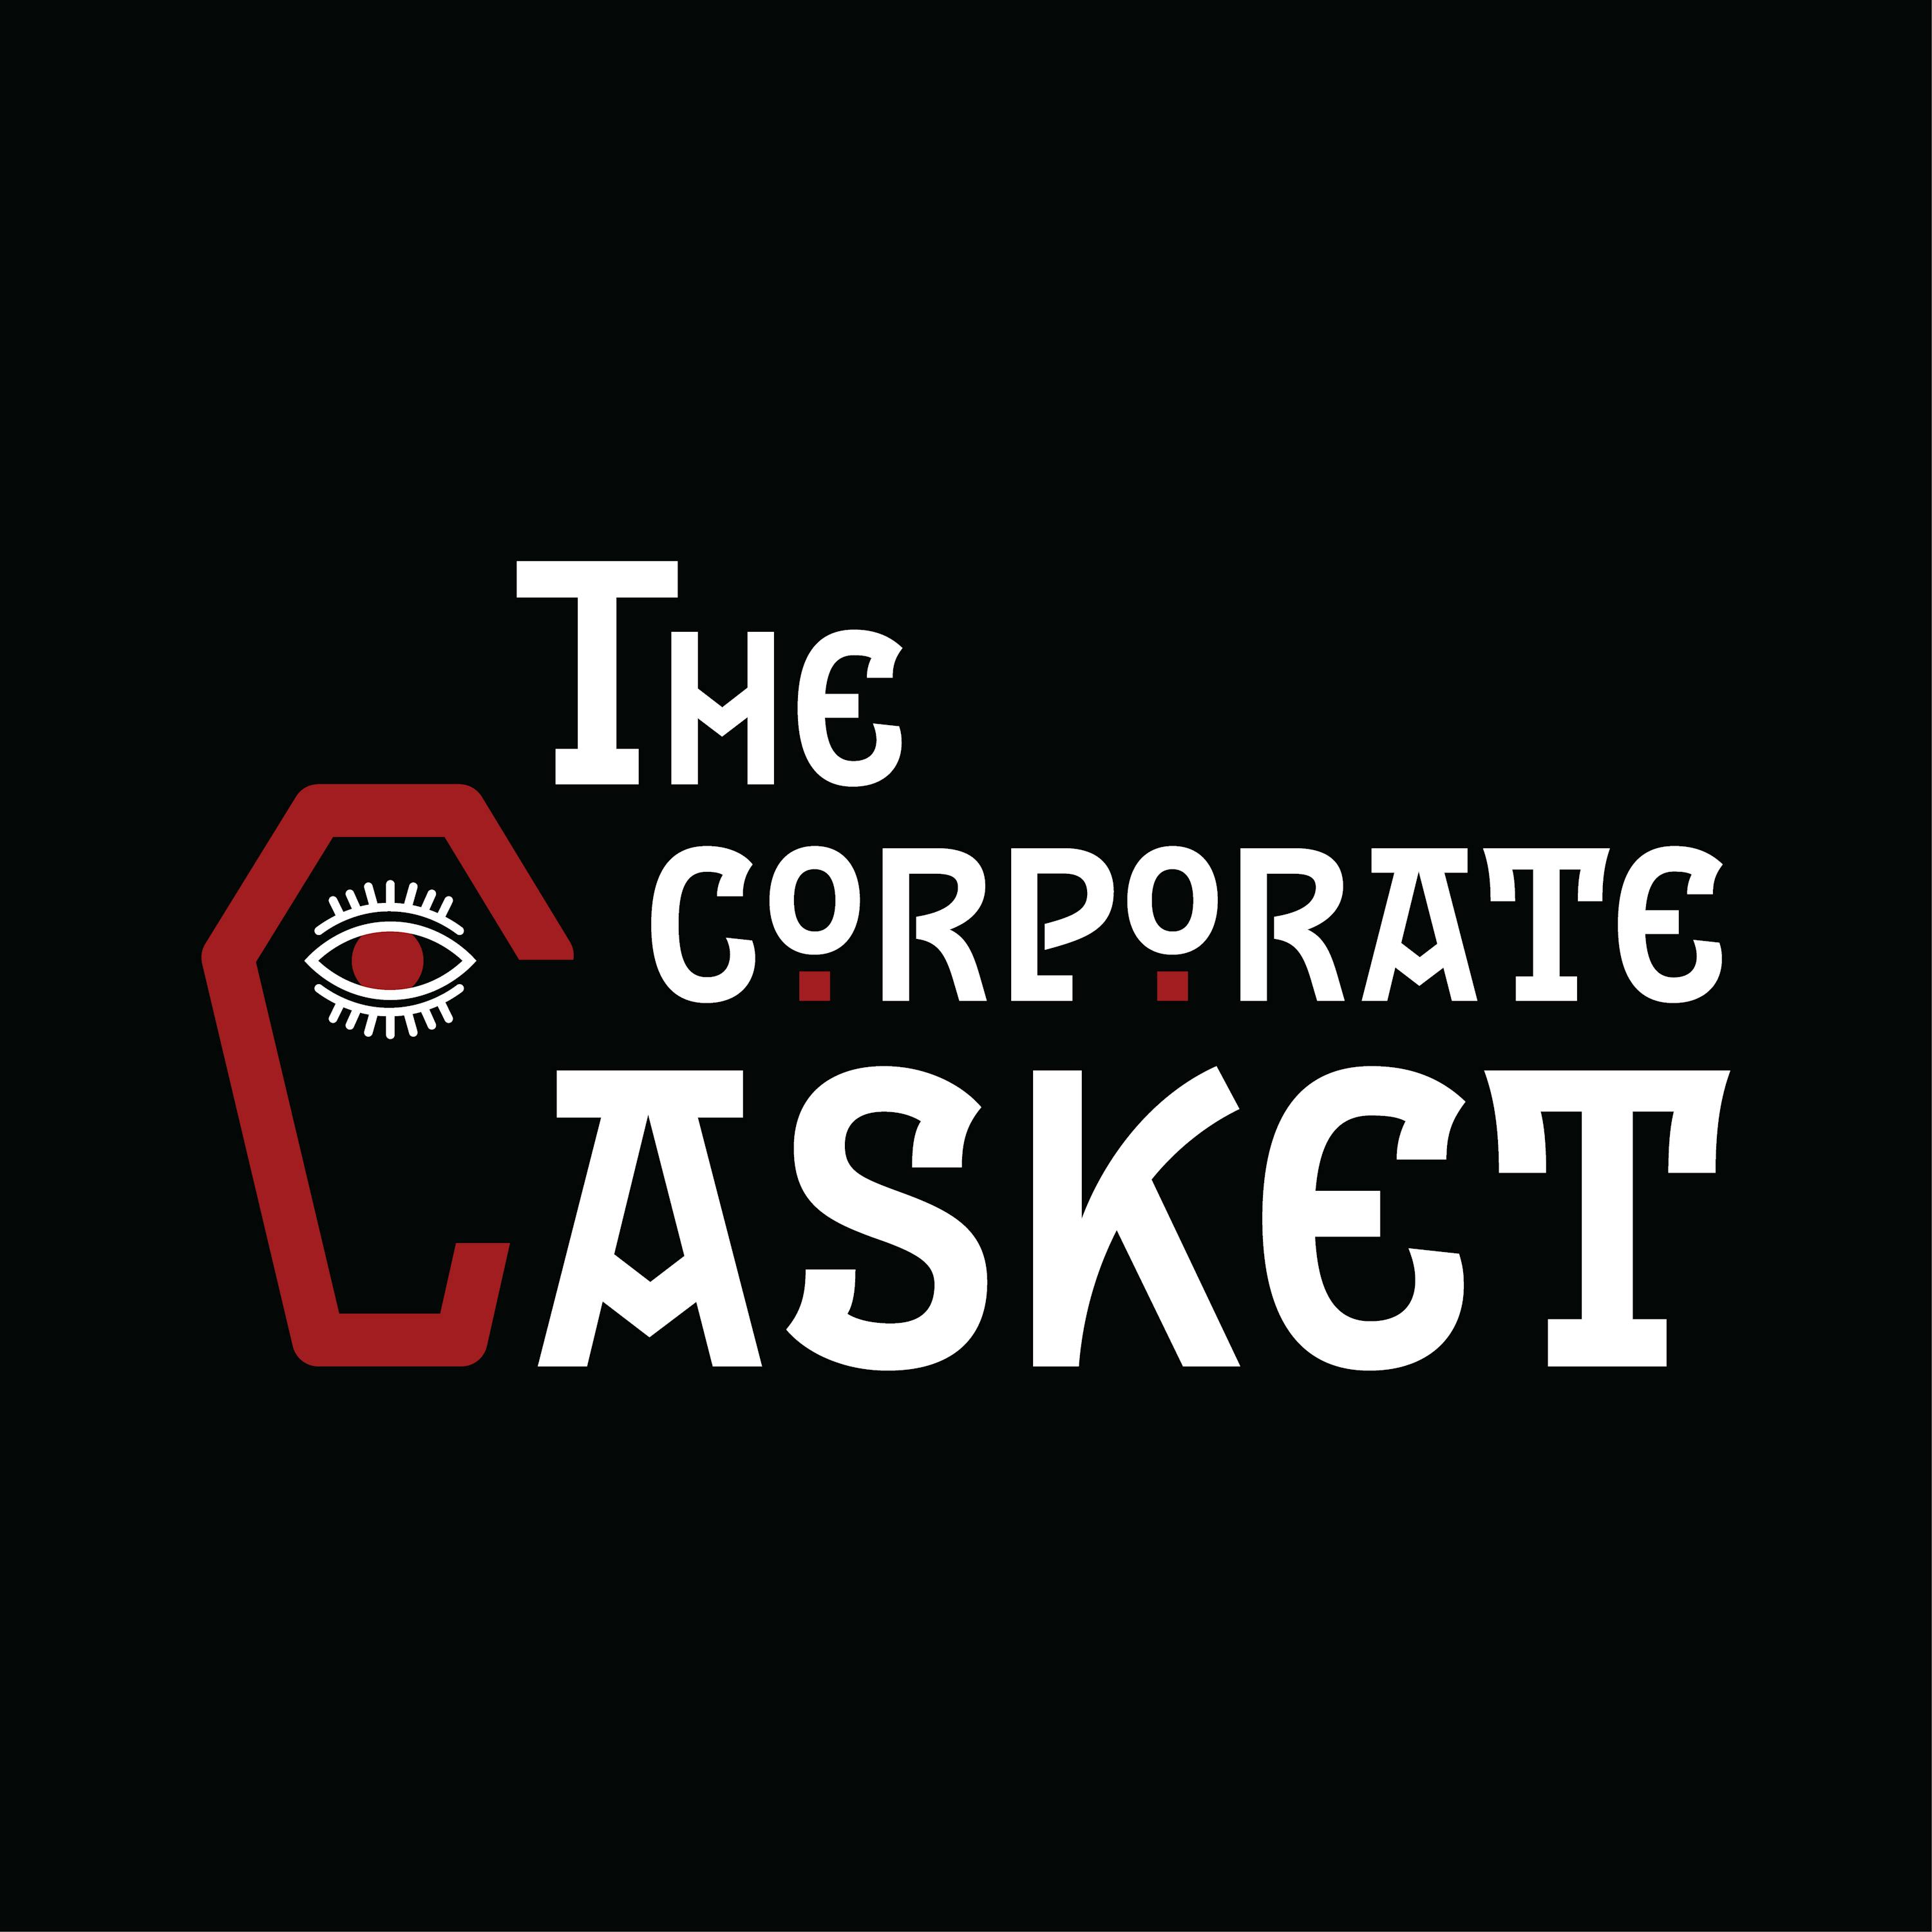 Russell Brand: Comedian or Predator? | Corporate Casket